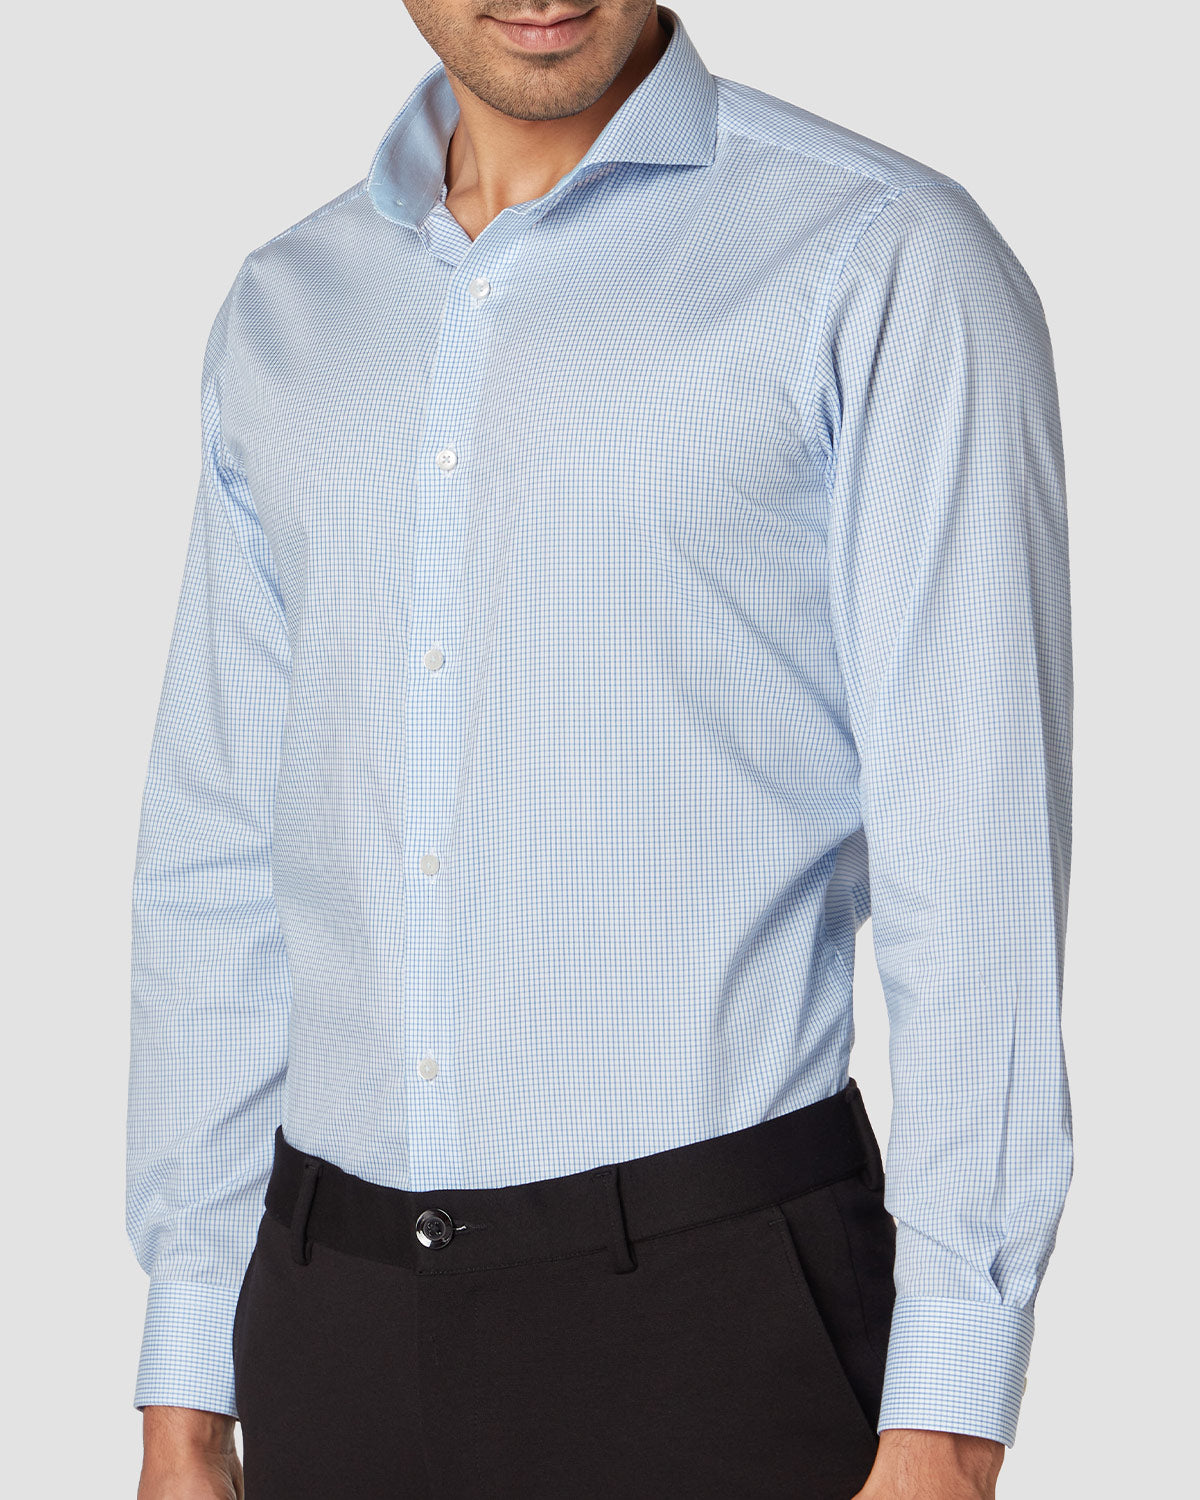 Bombay Shirt Company - Thomas Mason Glacier Grid Wrinkle Resistant Shirt